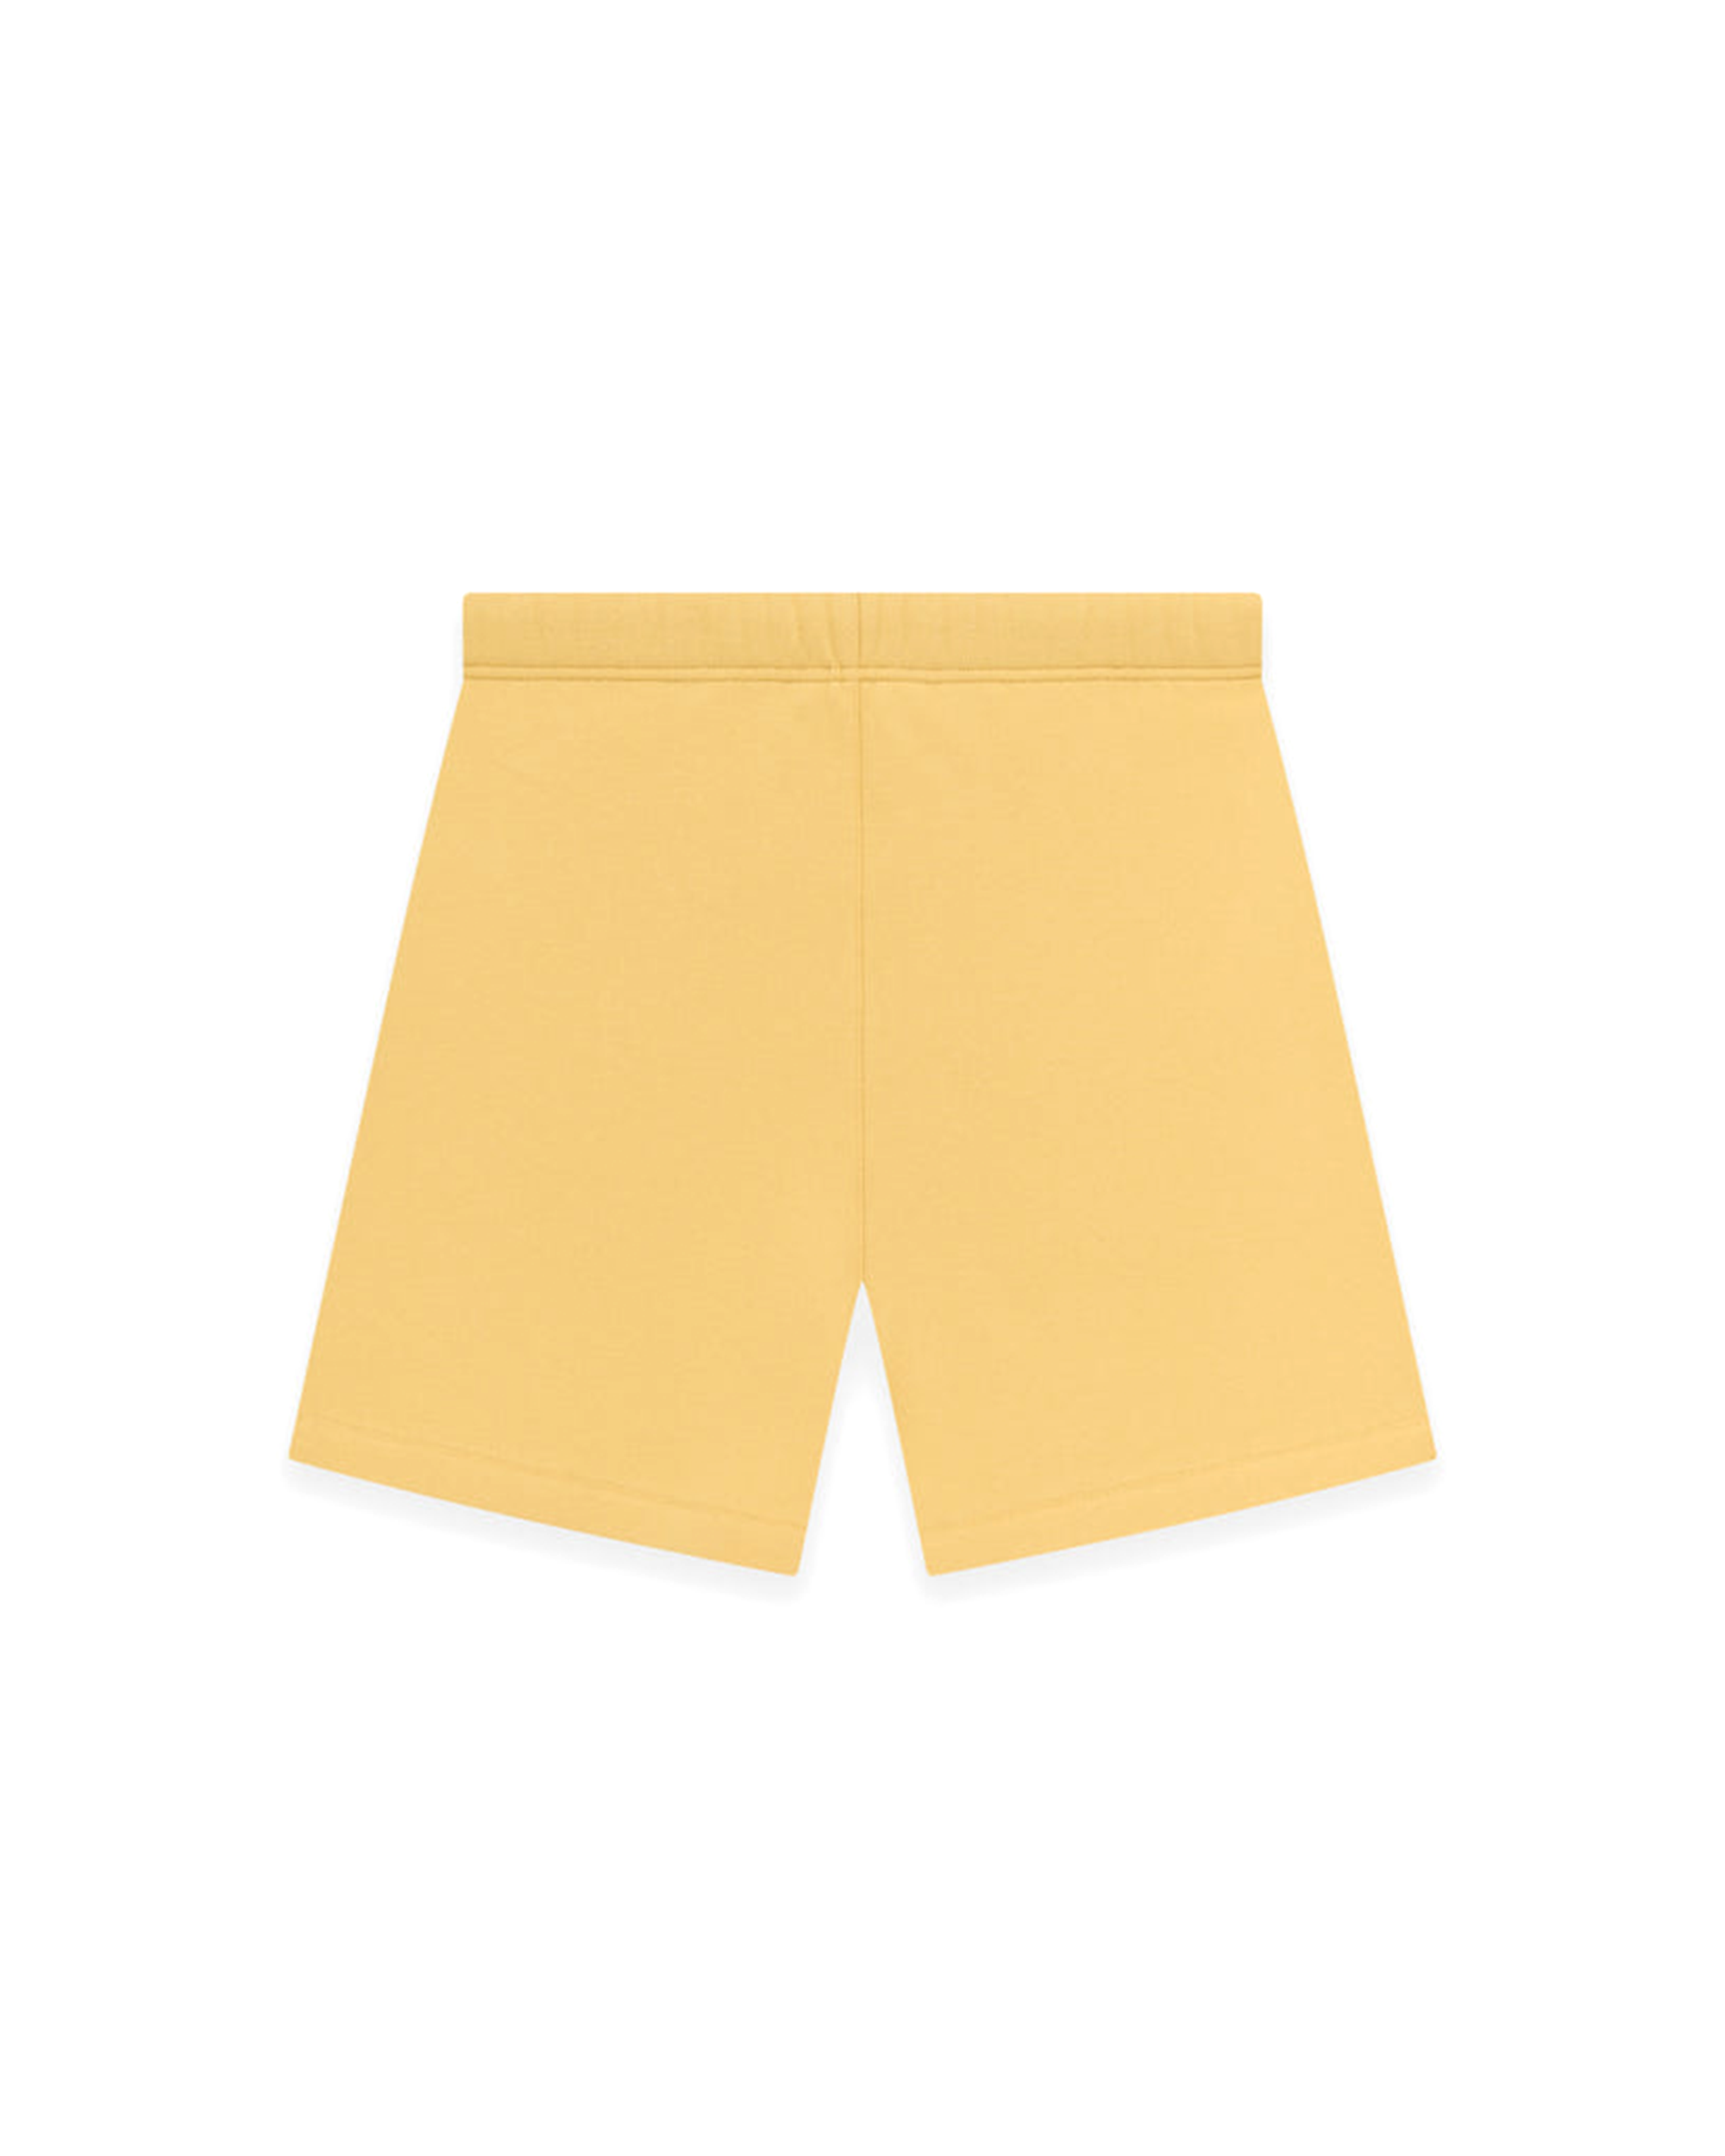 Essentials Shorts - Light Tuscan